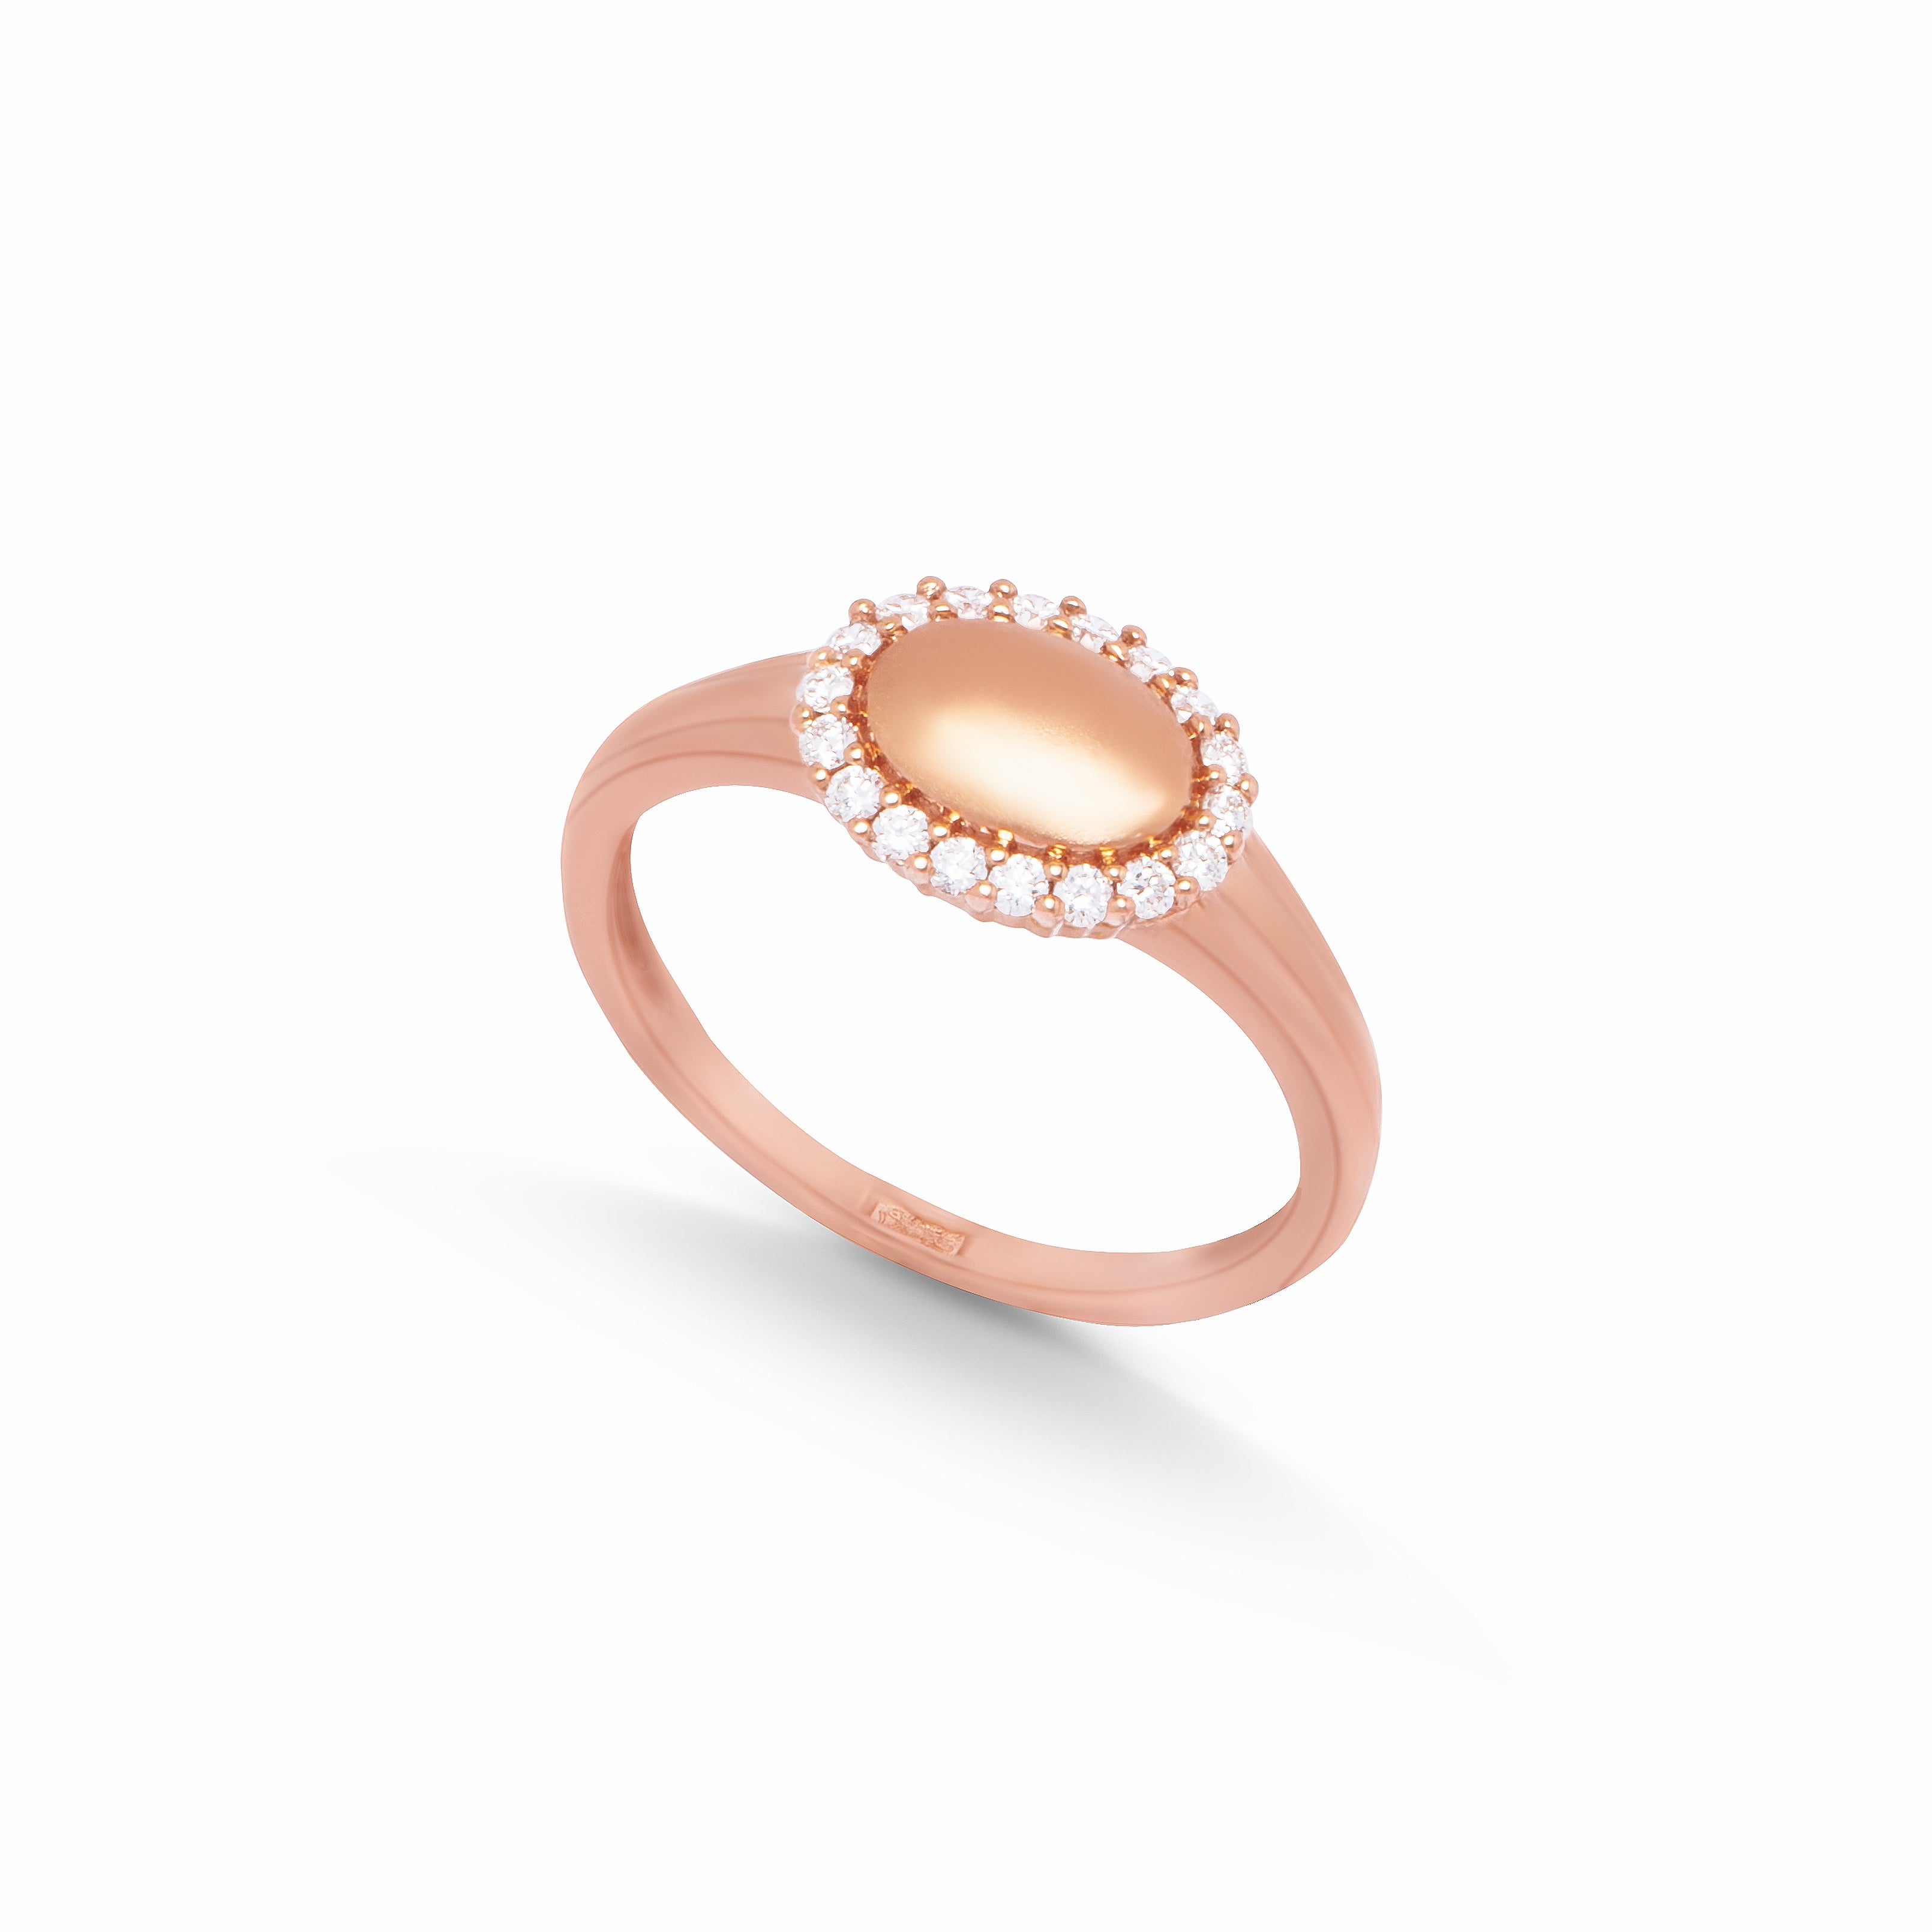 Precious Diamond Ring in Rose 18K Gold - R32495